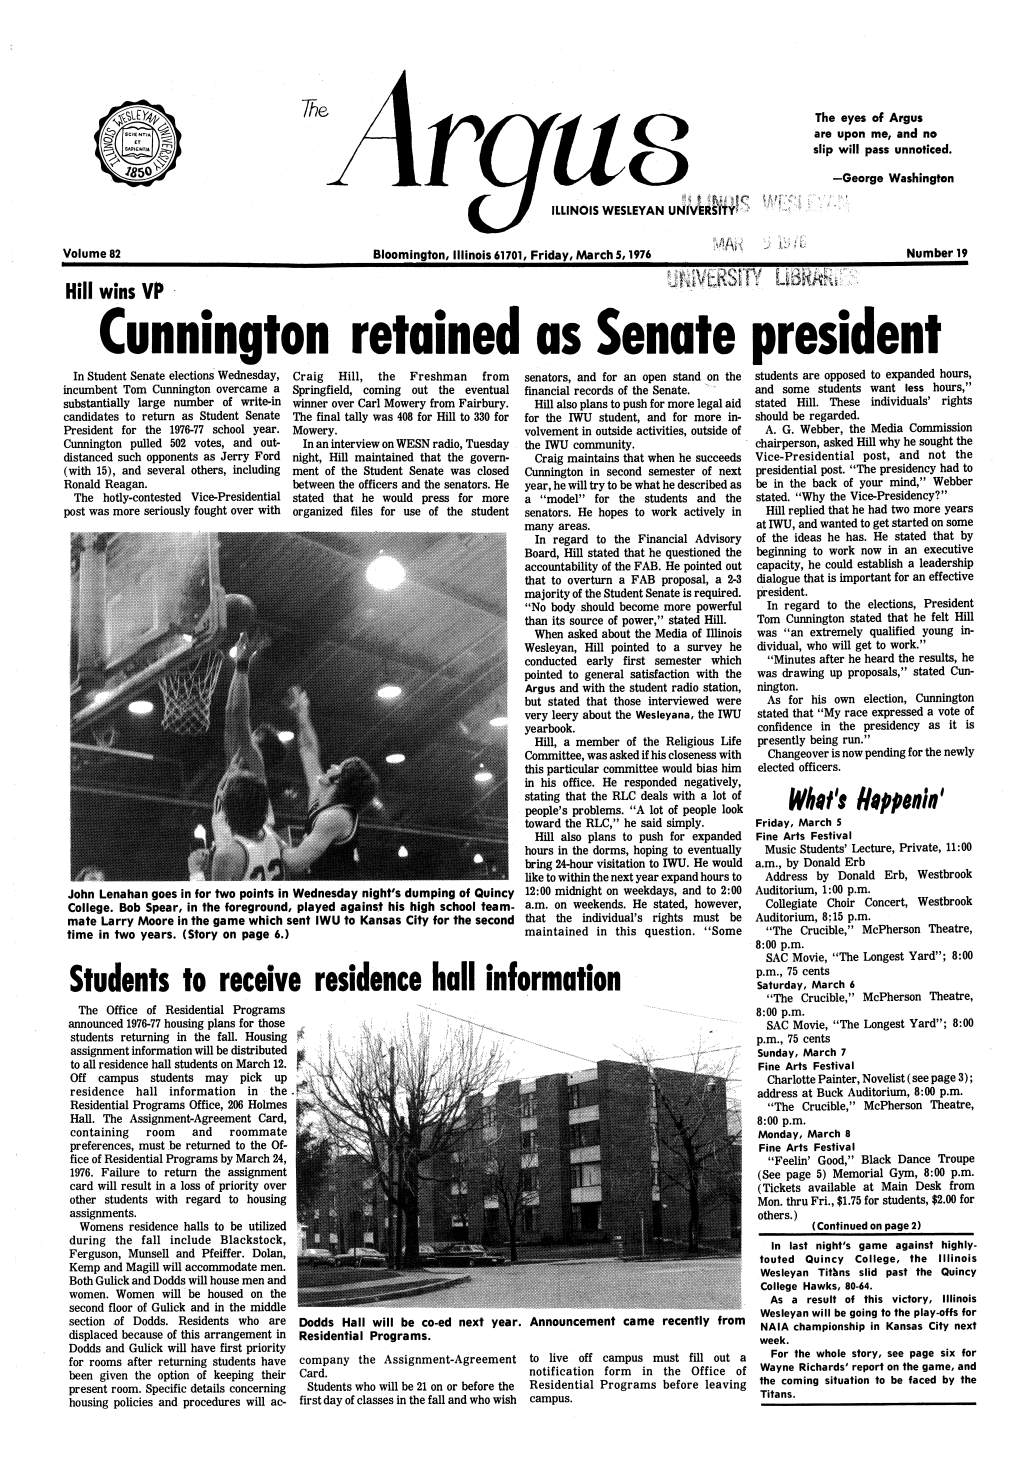 Cunnington Retained As Senate President